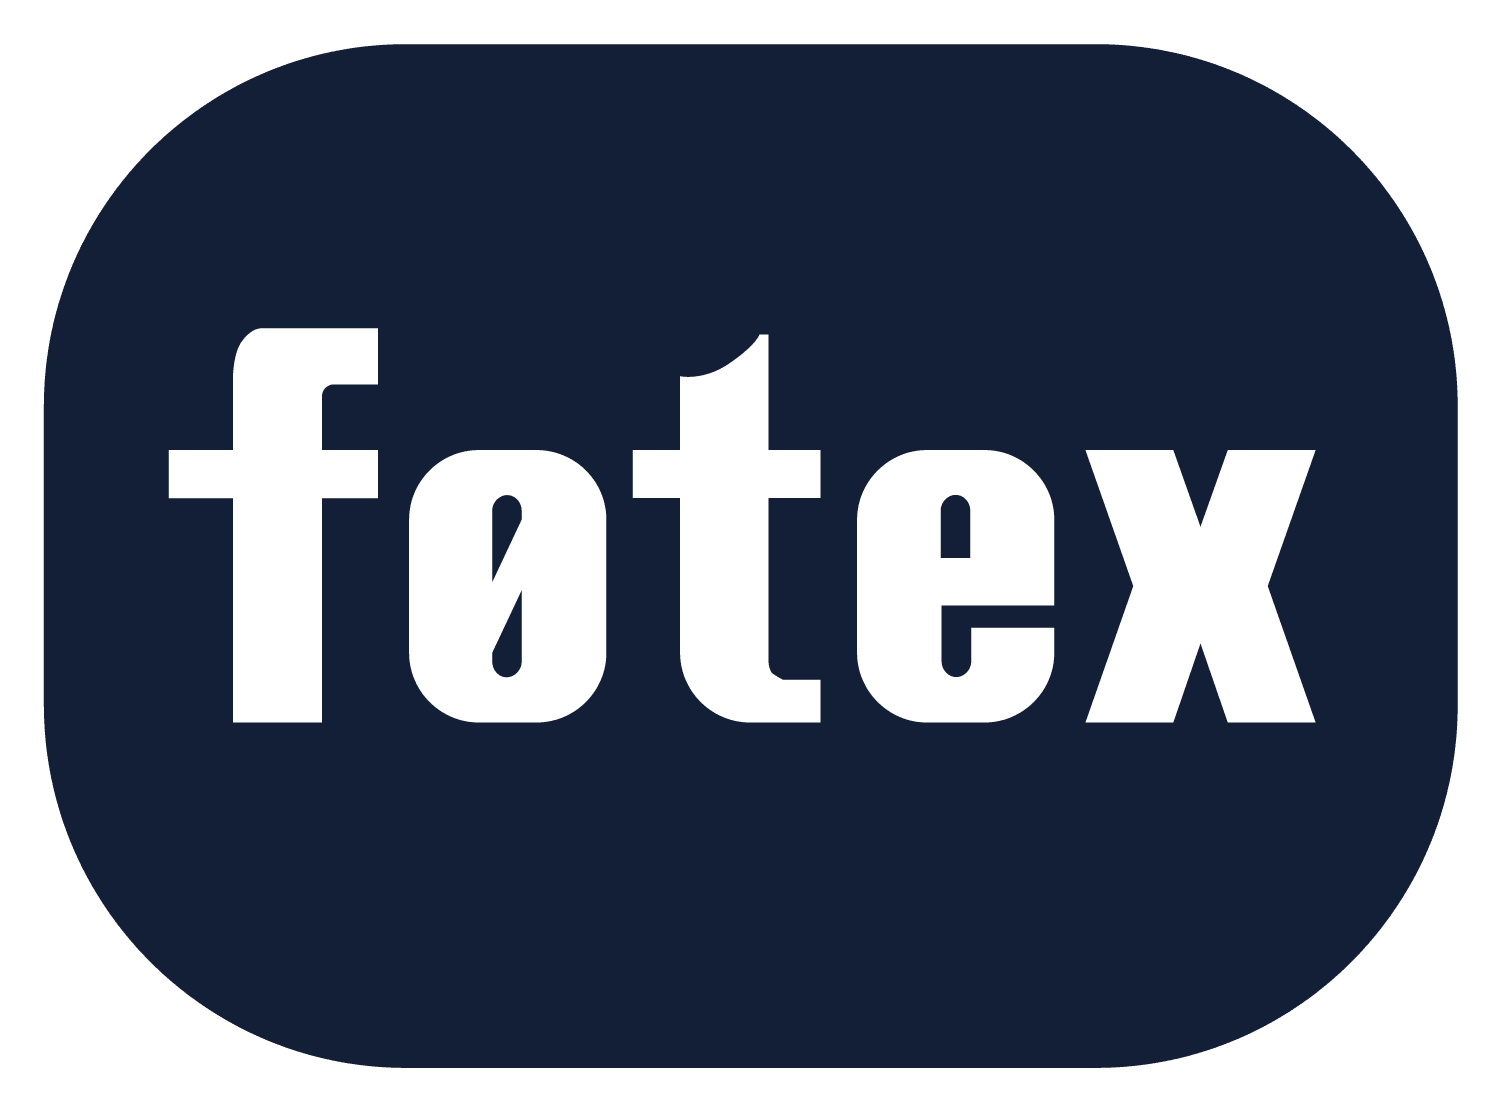 foetex logo